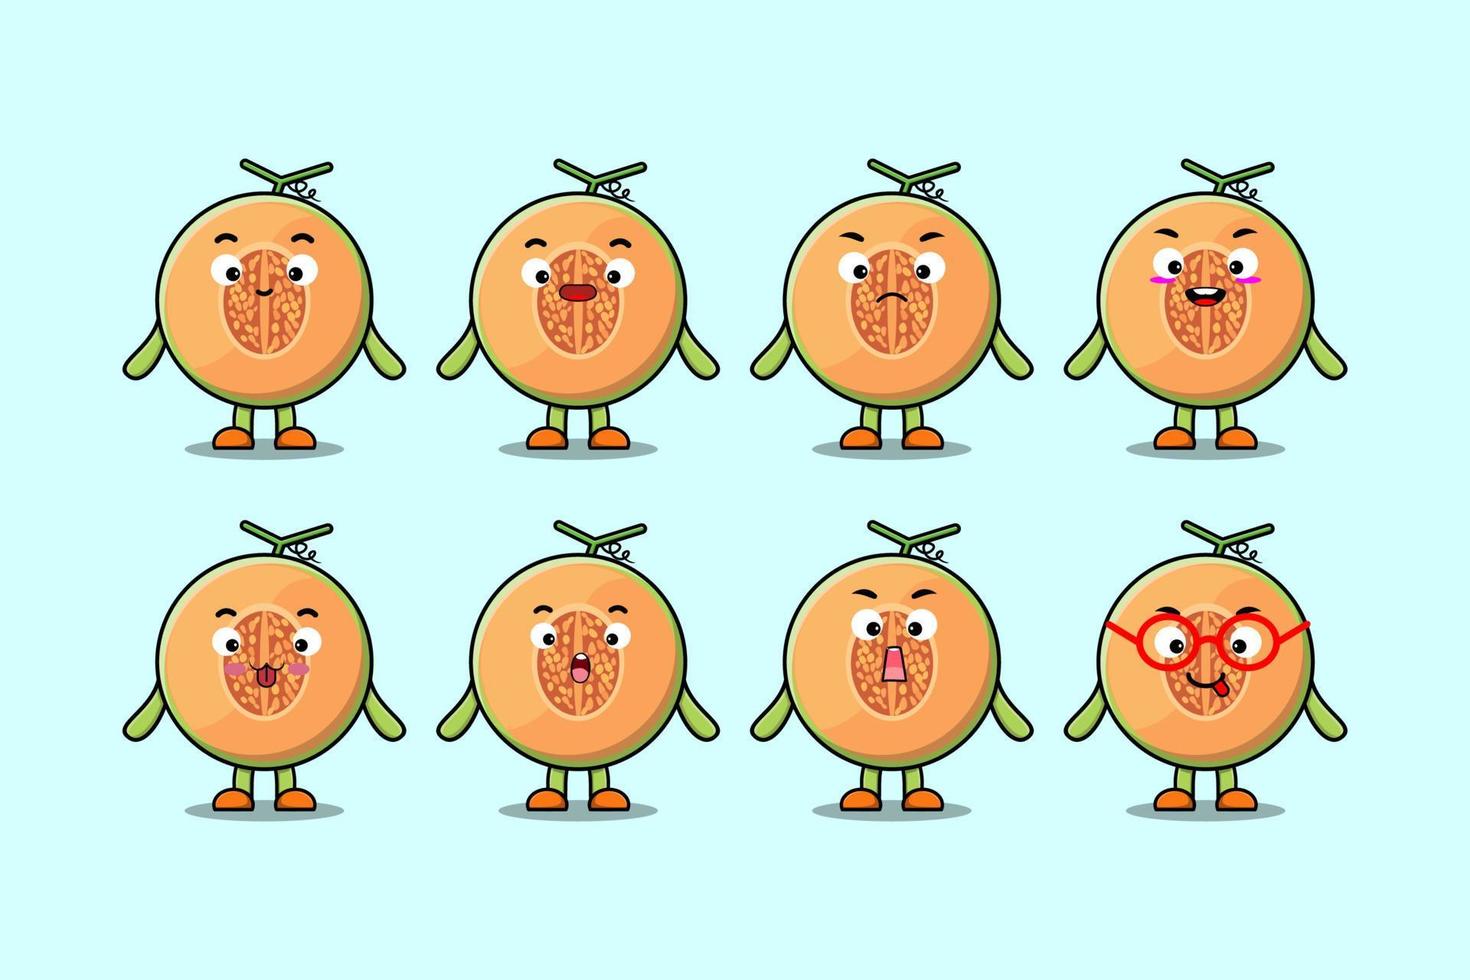 Set kawaii Melon cartoon character with expression vector